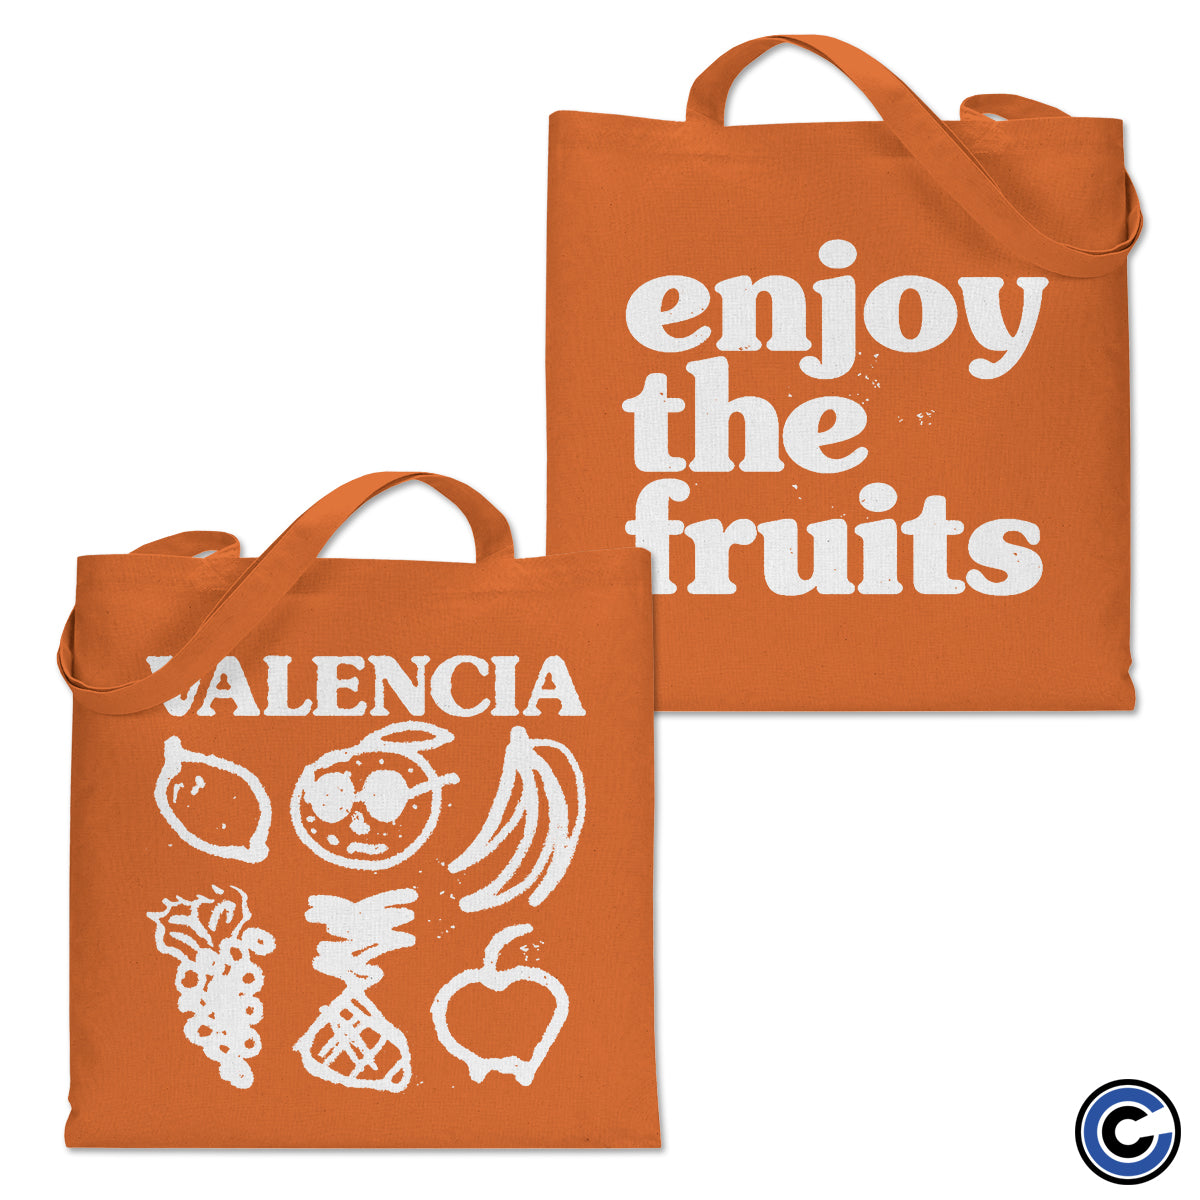 Valencia "Fruits" Tote Bag